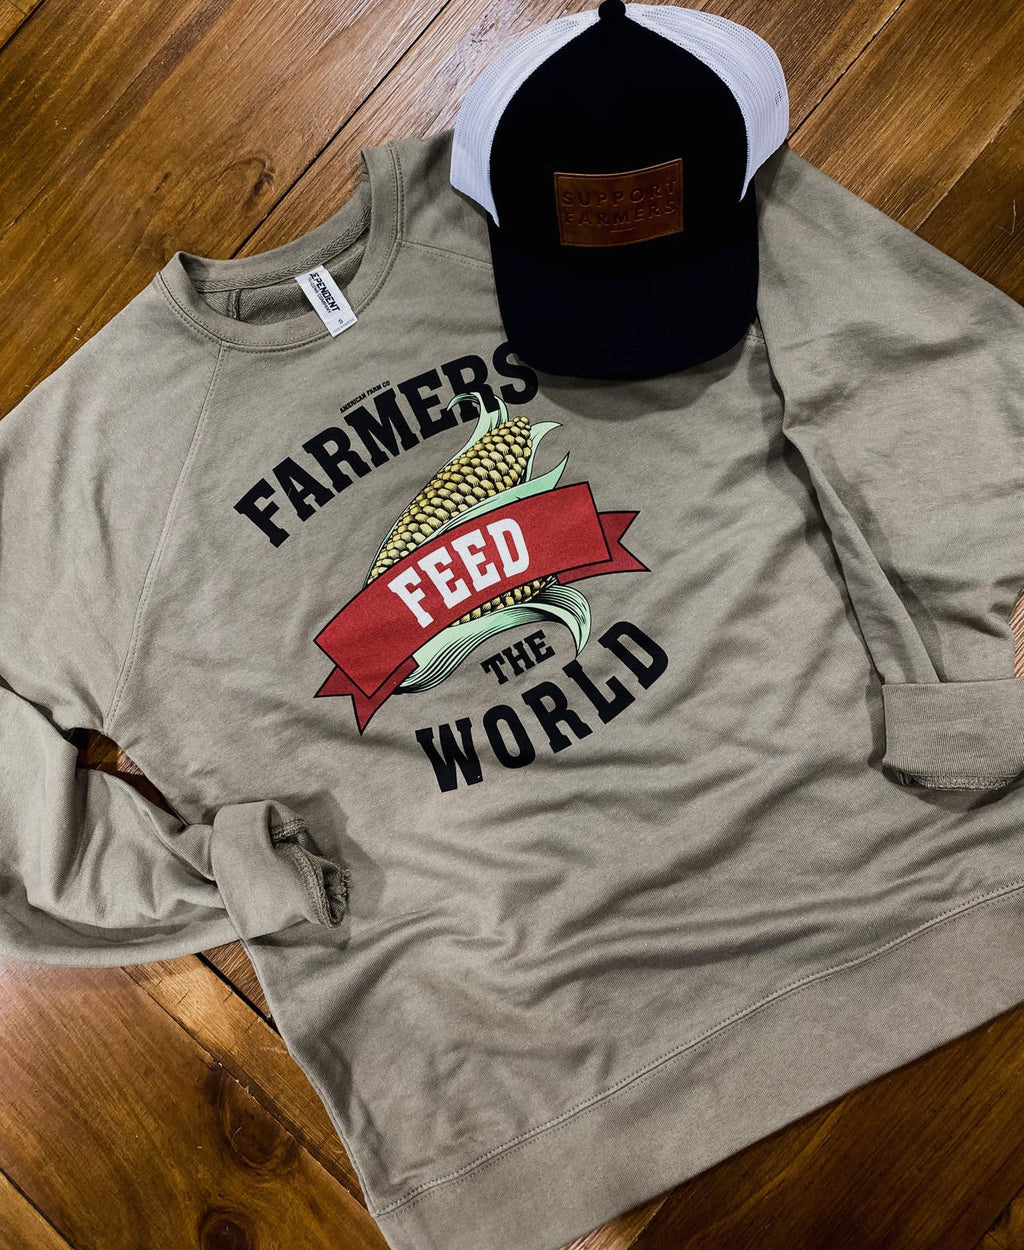 Farmer’s Feed crew